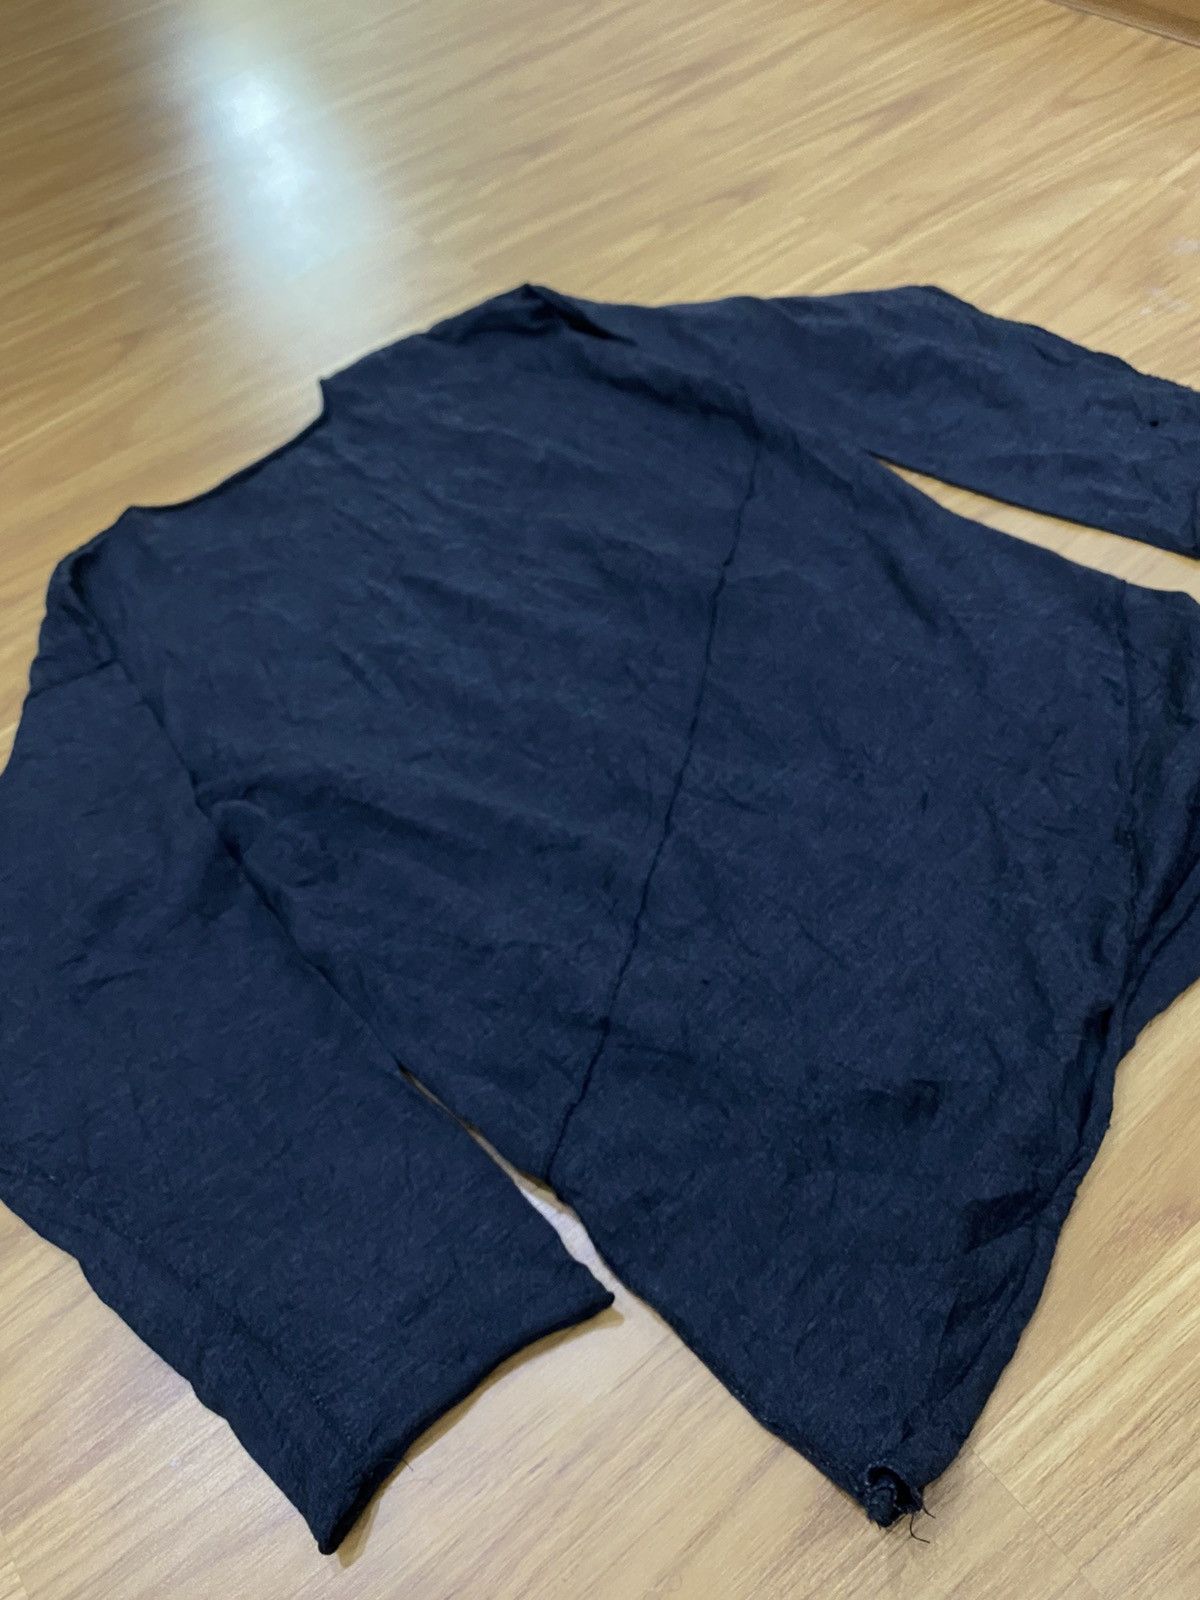 AW91 Rei Kawakubo Cut And Sew Wool Sample L/S Shirt - 8